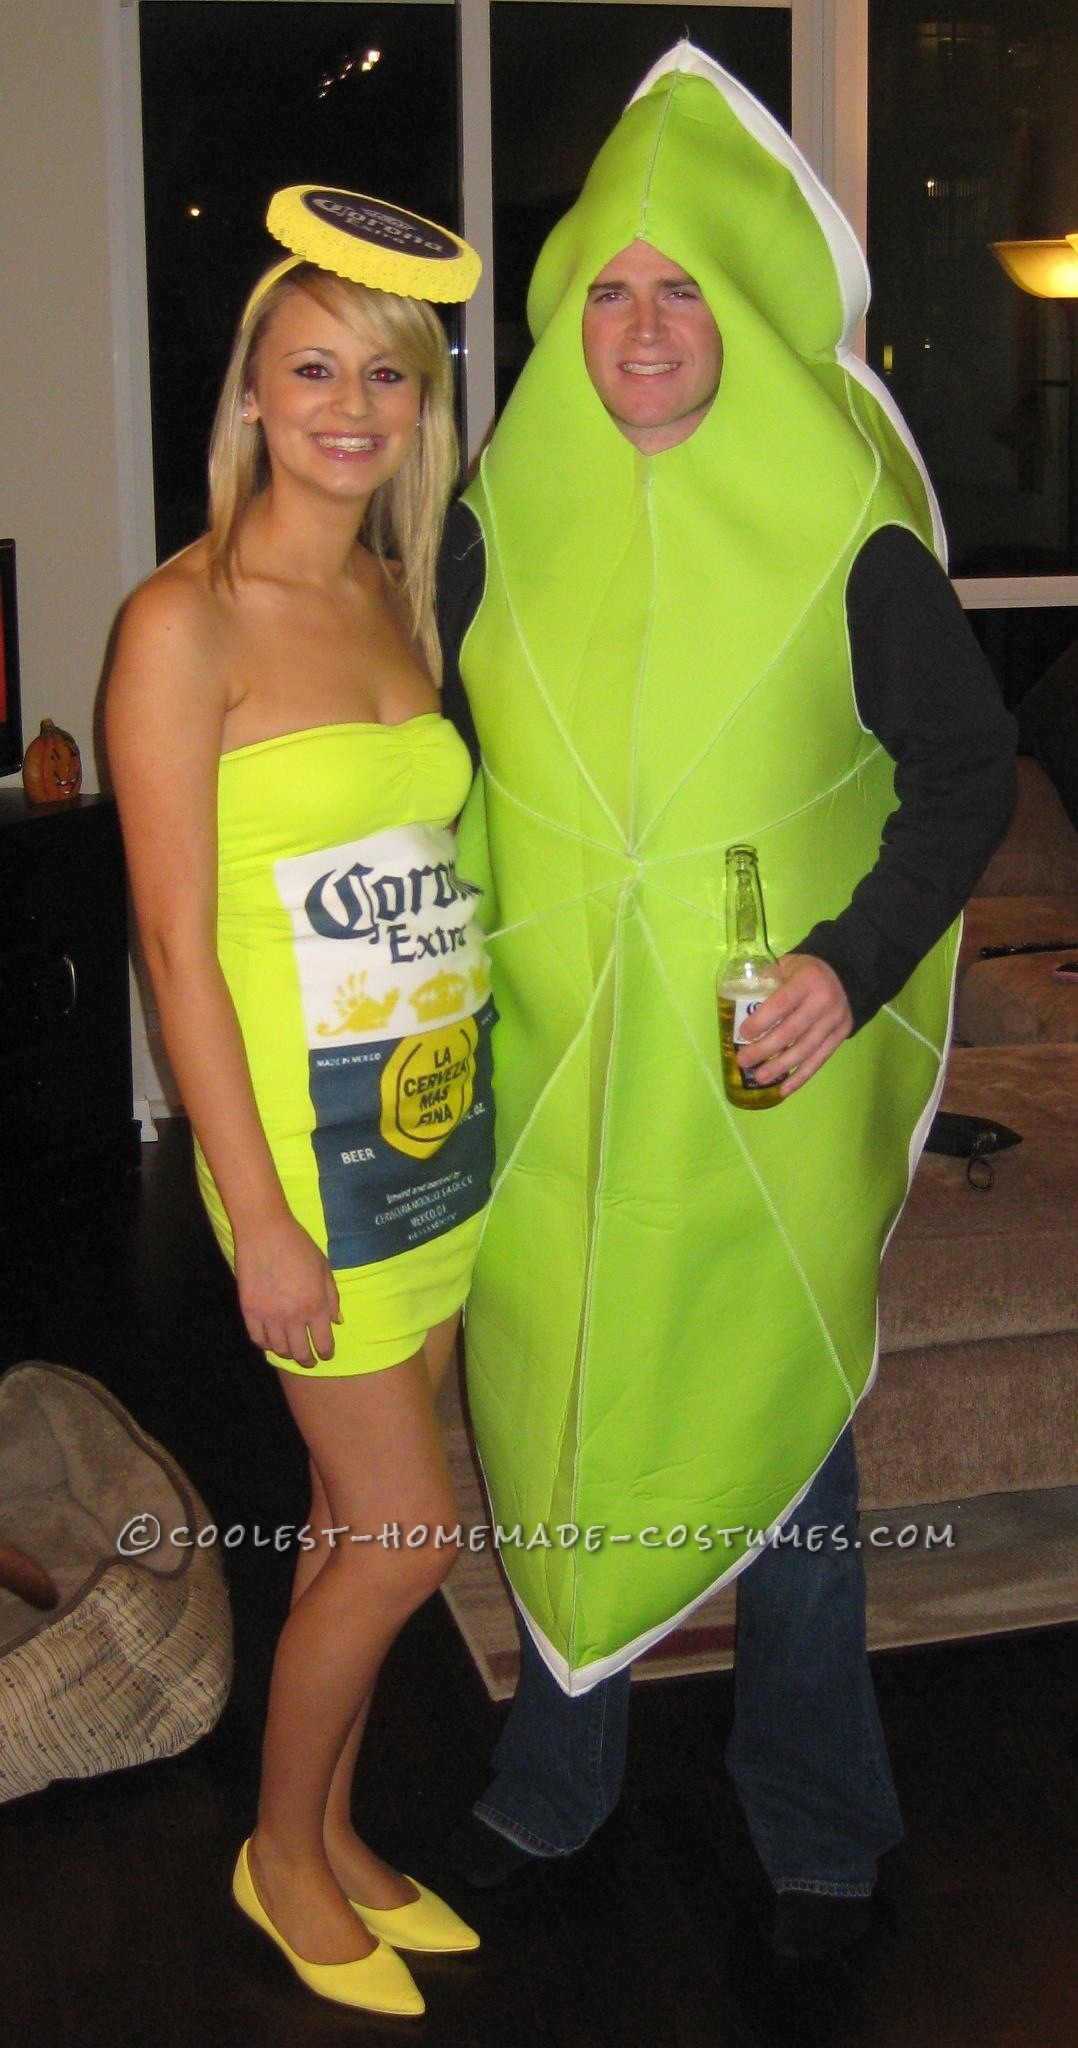 Sexy Homemade Corona with Lime Couple Costume